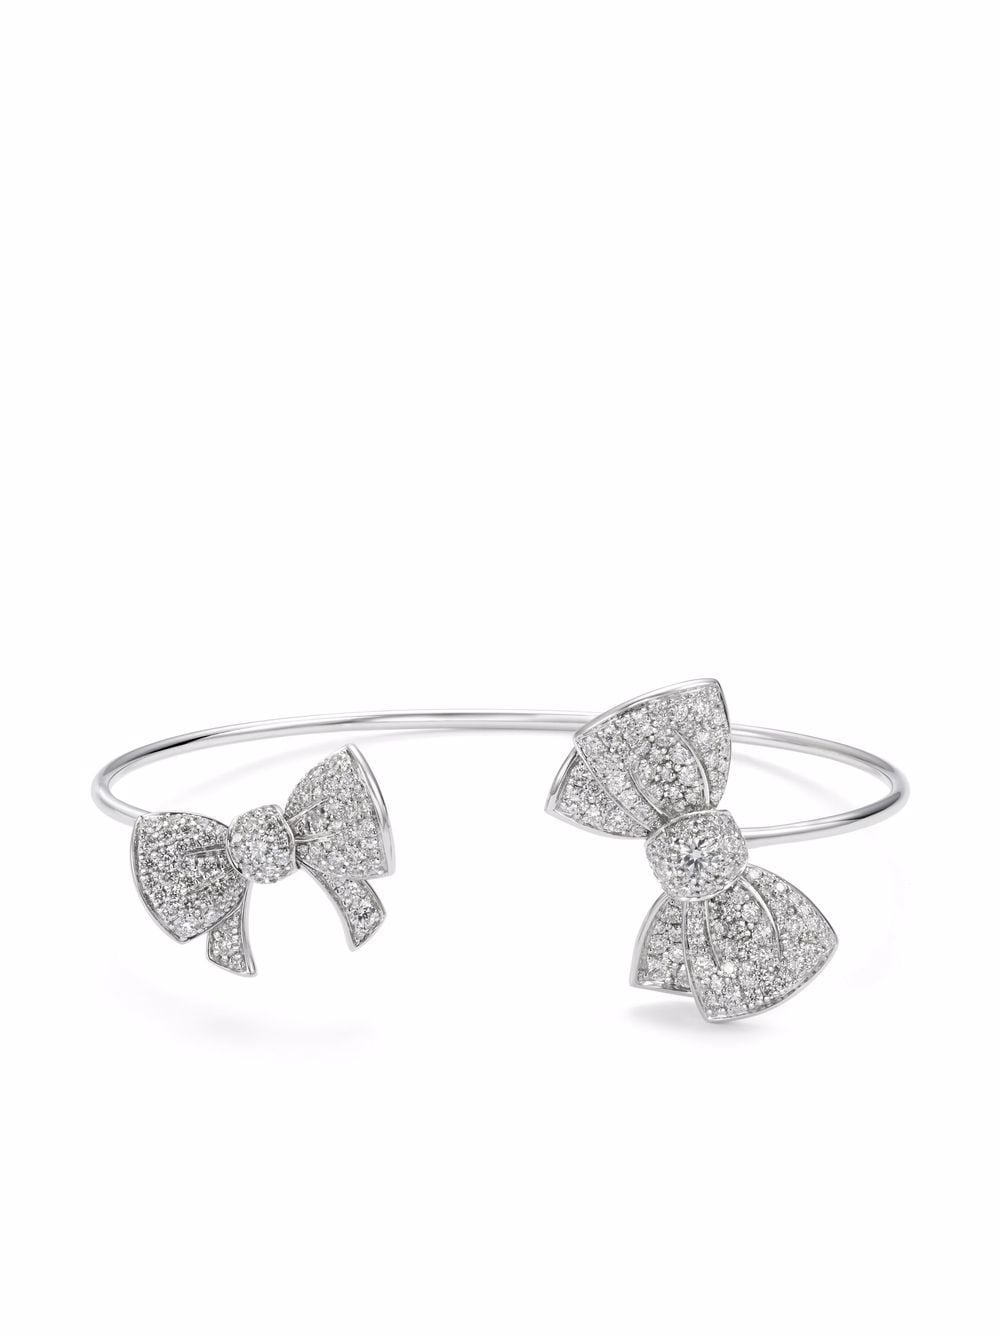 David Morris 18kt white gold Beau diamond double-bow bangle bracelet